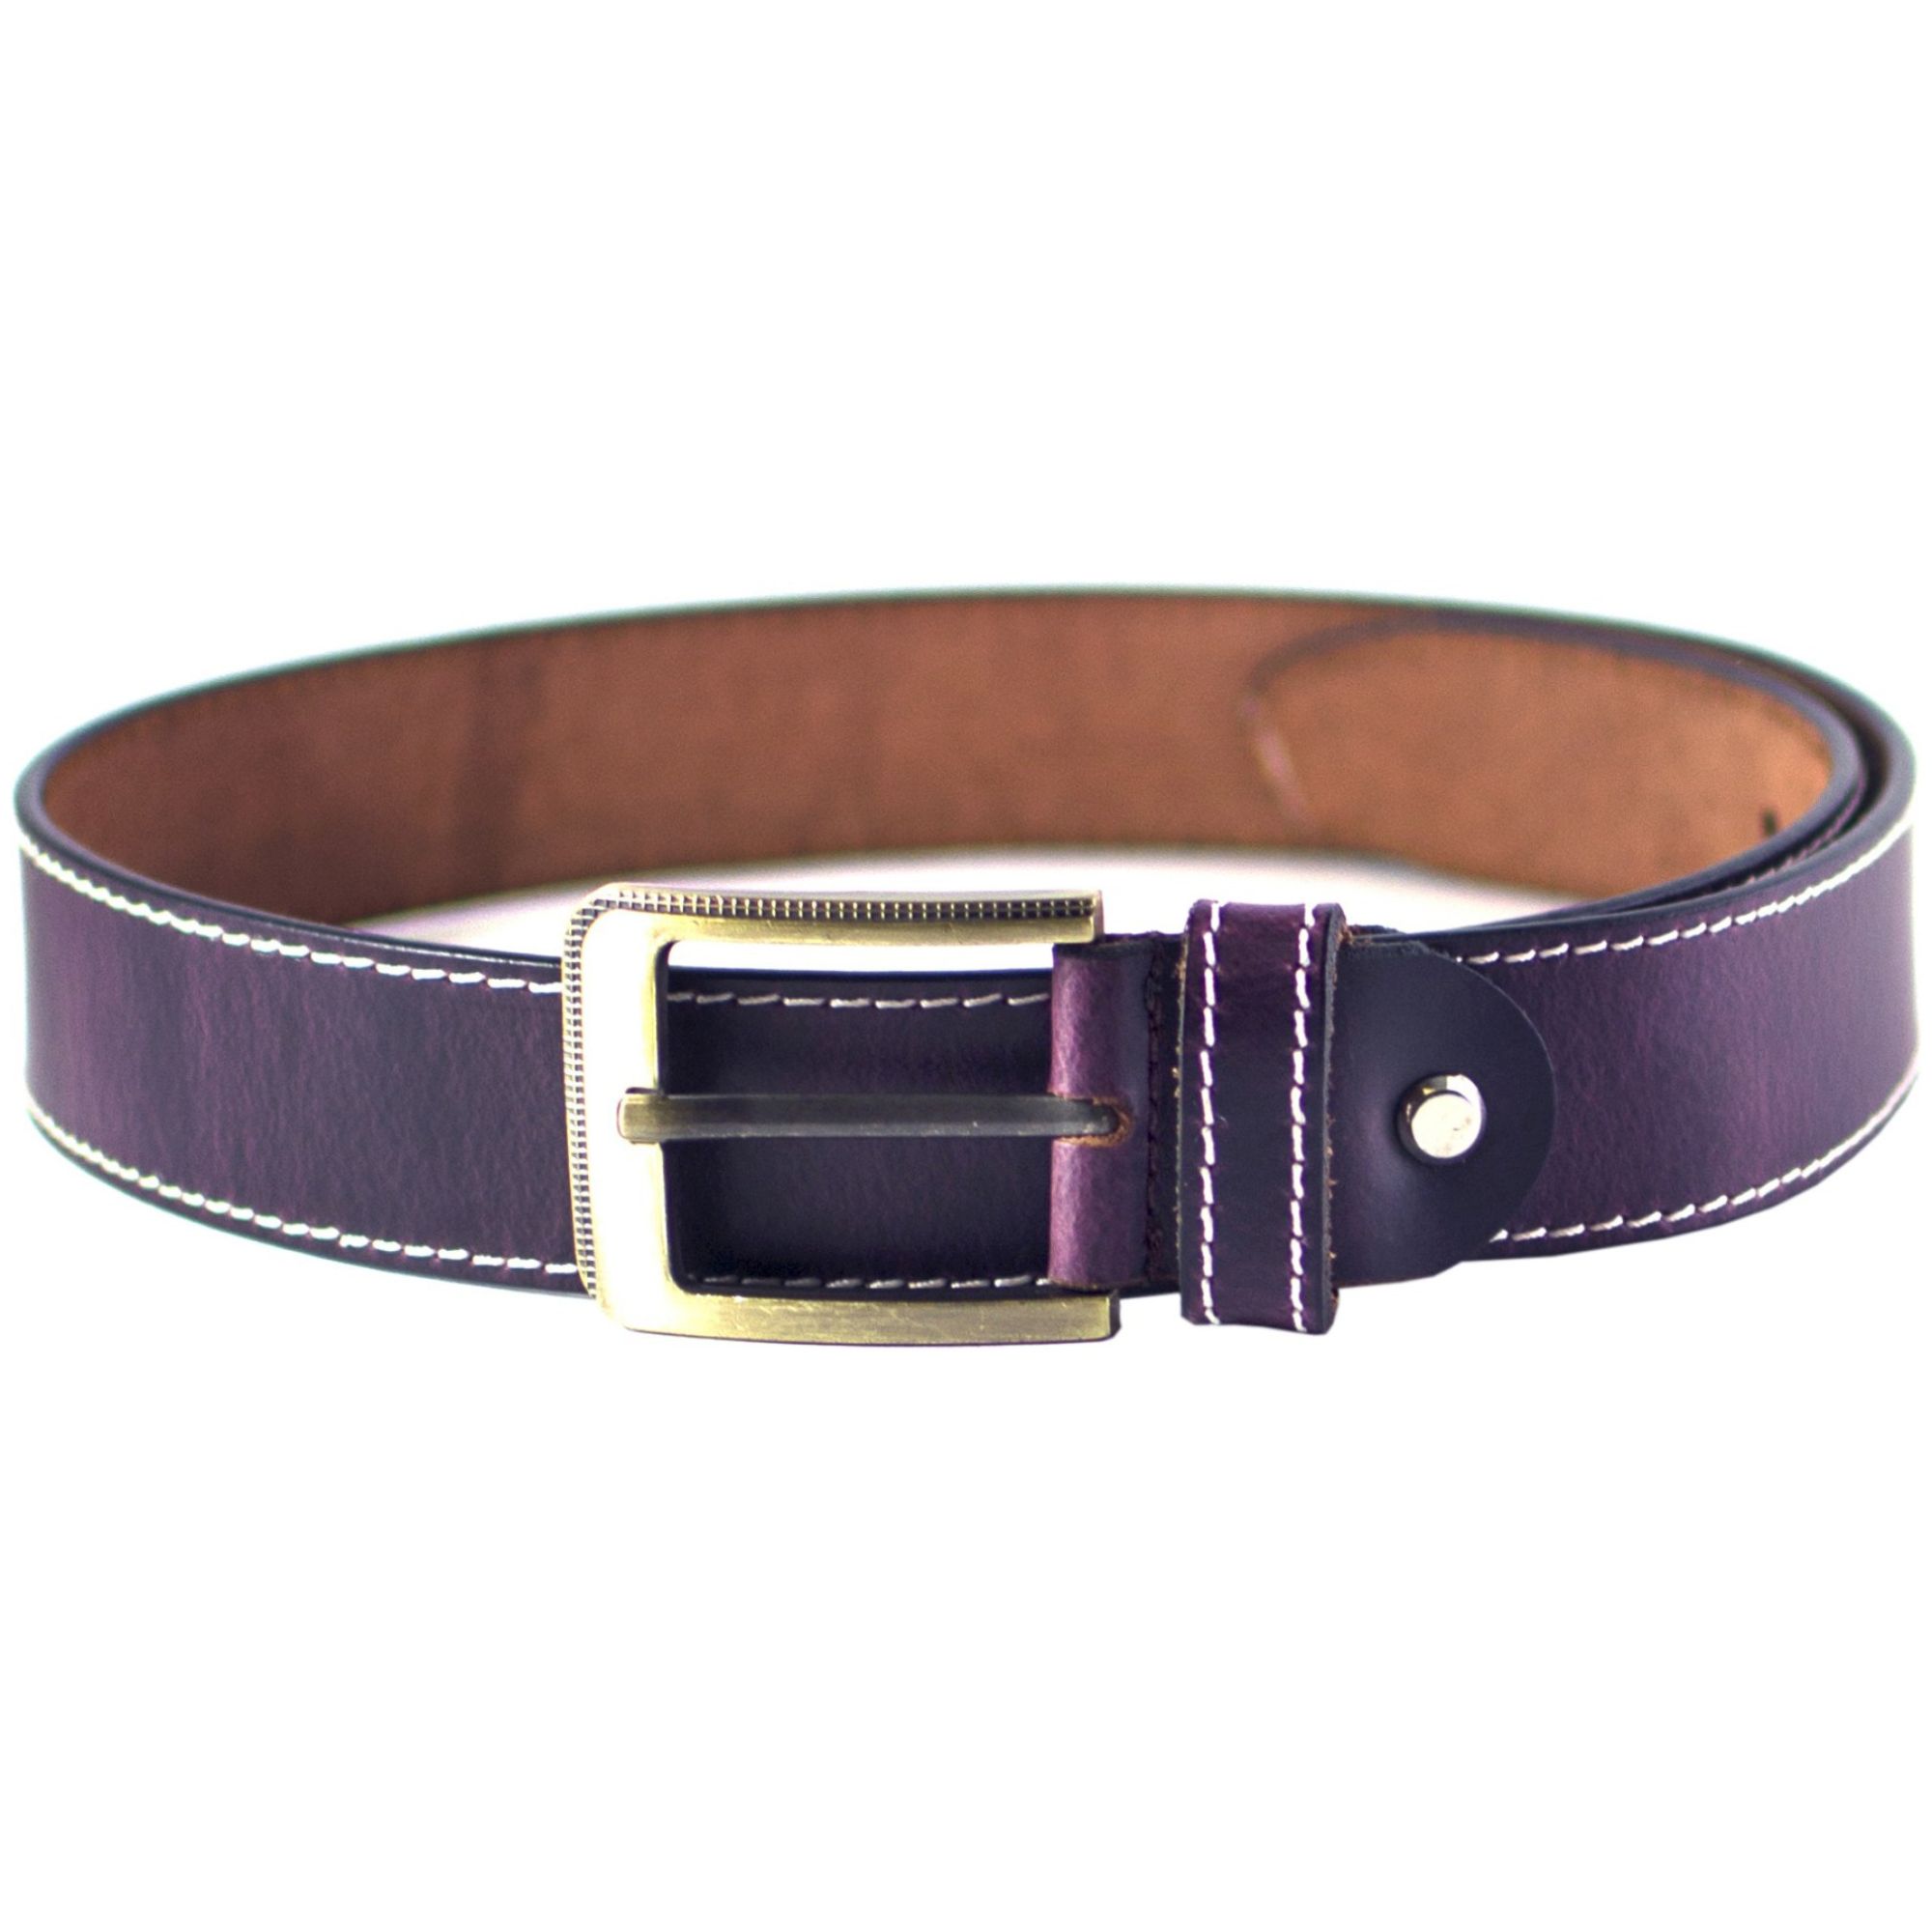 Debonair International Men's Genuine Leather Belt with 5 Punch Holes, DI934246, Purple